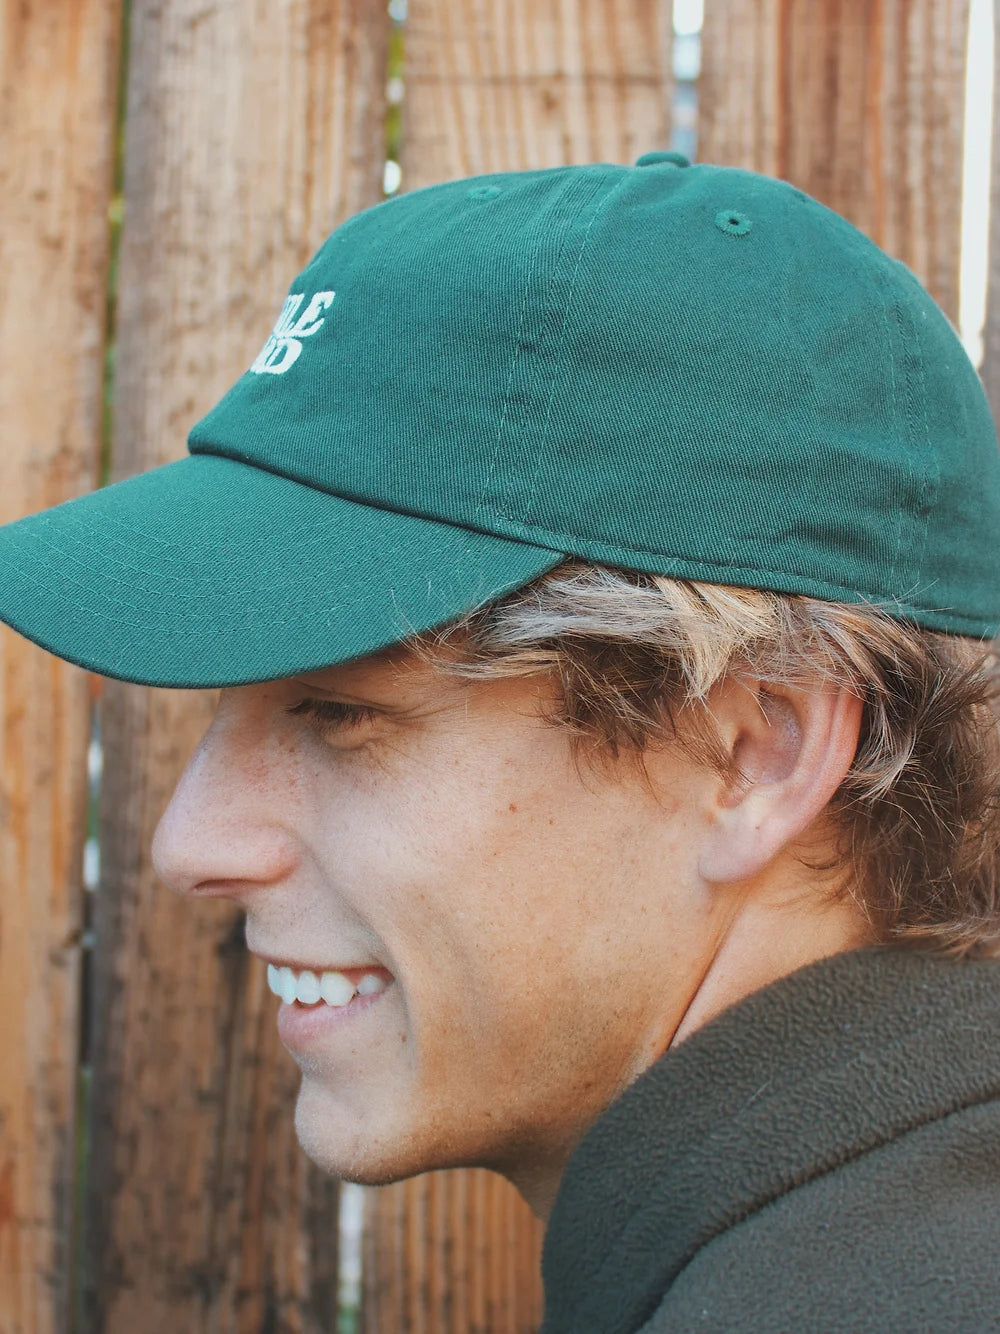 Green Smile Hard Dad Hat